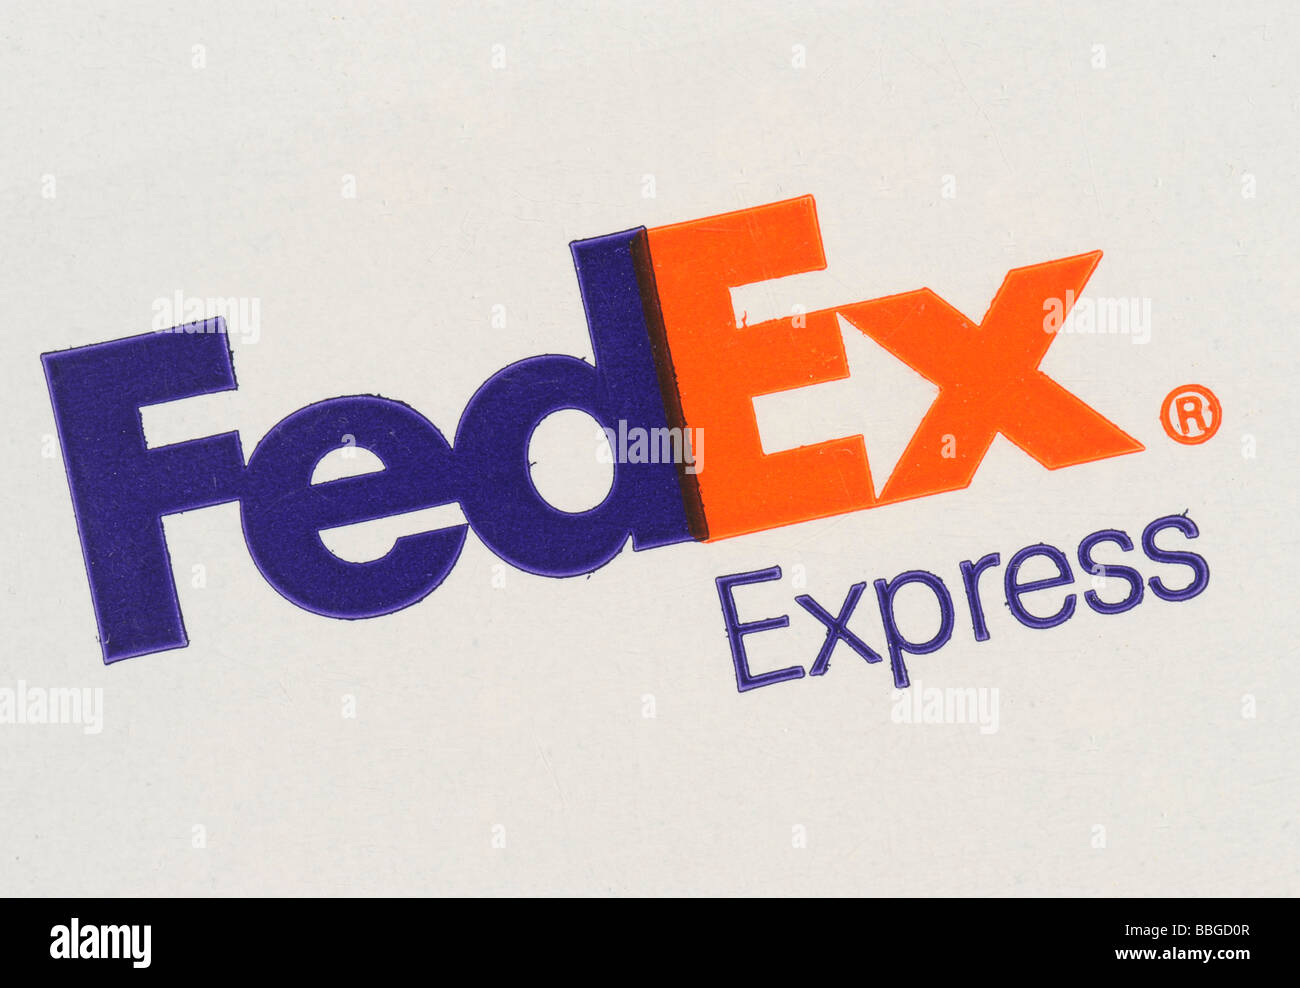 FedEx Express logo Stock Photo